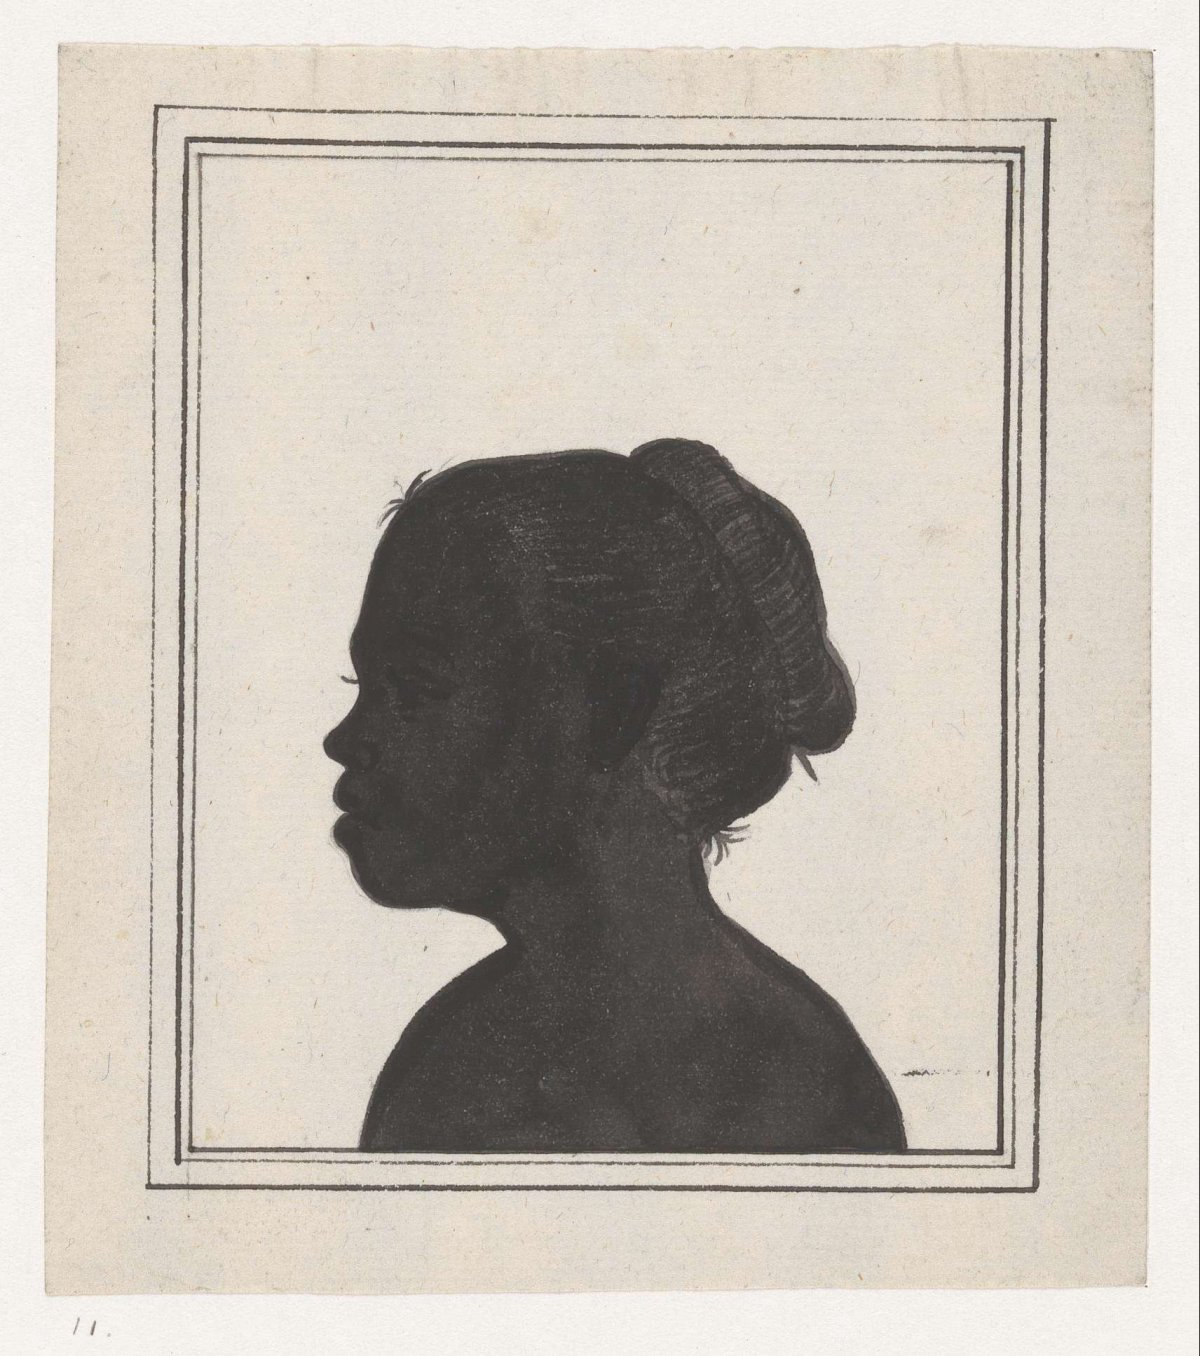 Silhouette portrait of Bietja, Jan Brandes, 1780 - 1785